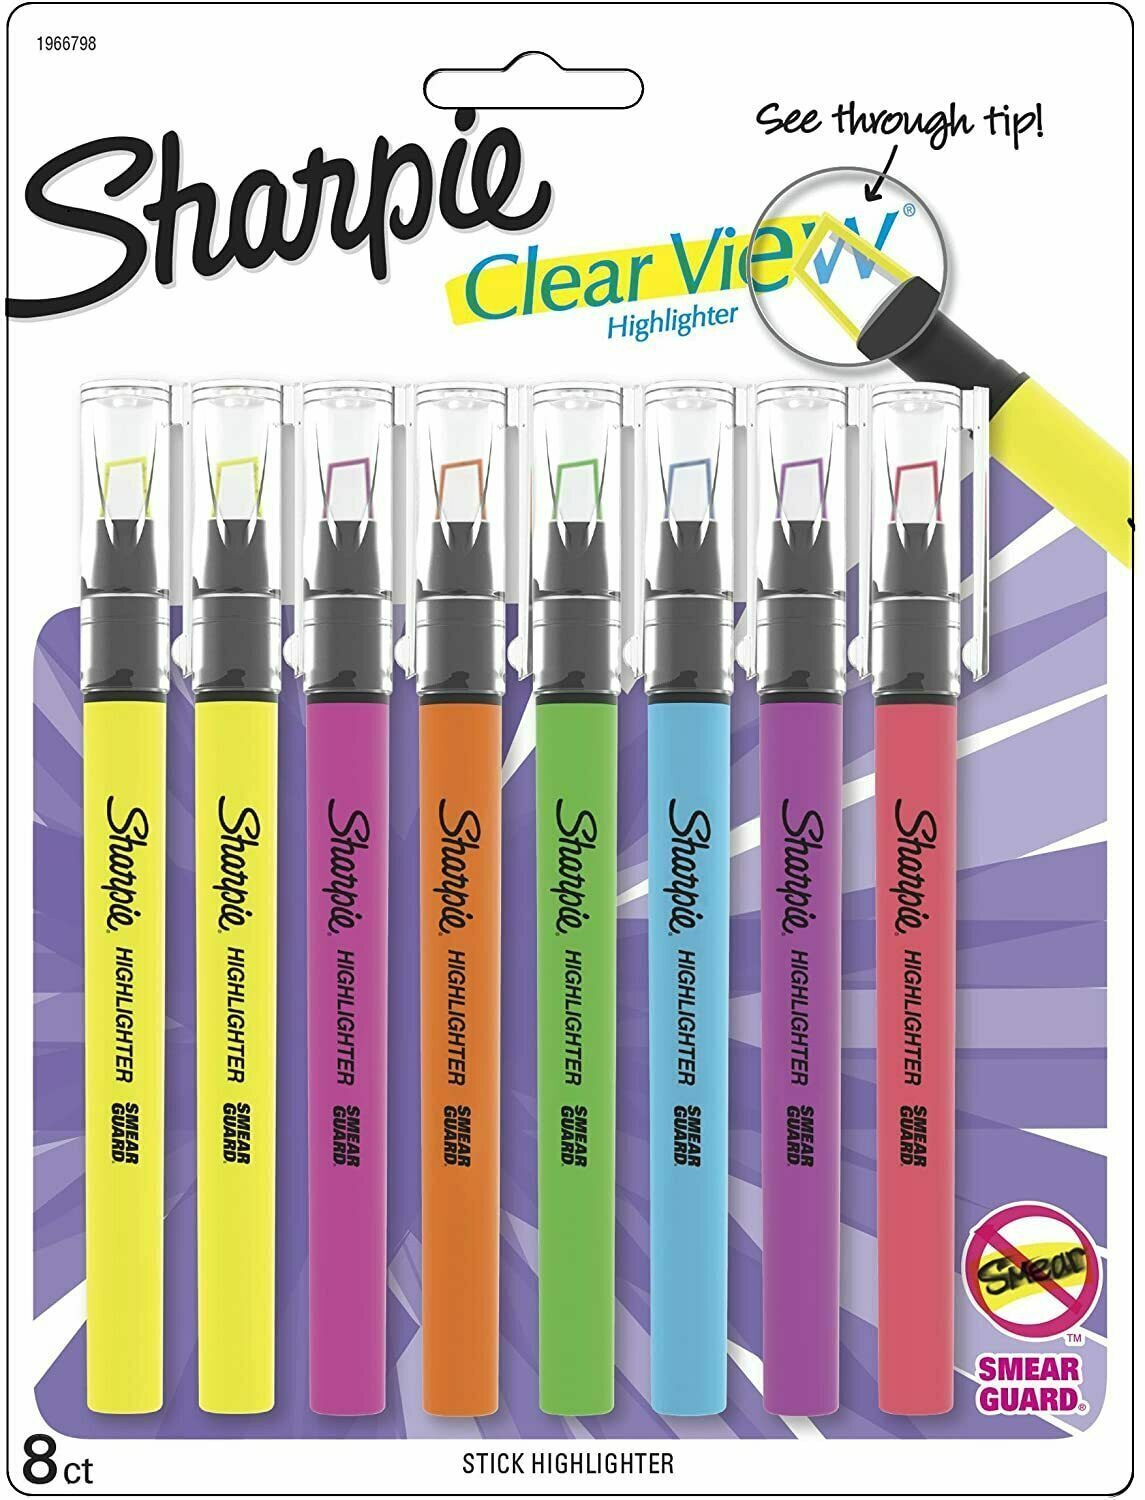 Sharpie Clear View Highlighter Stick